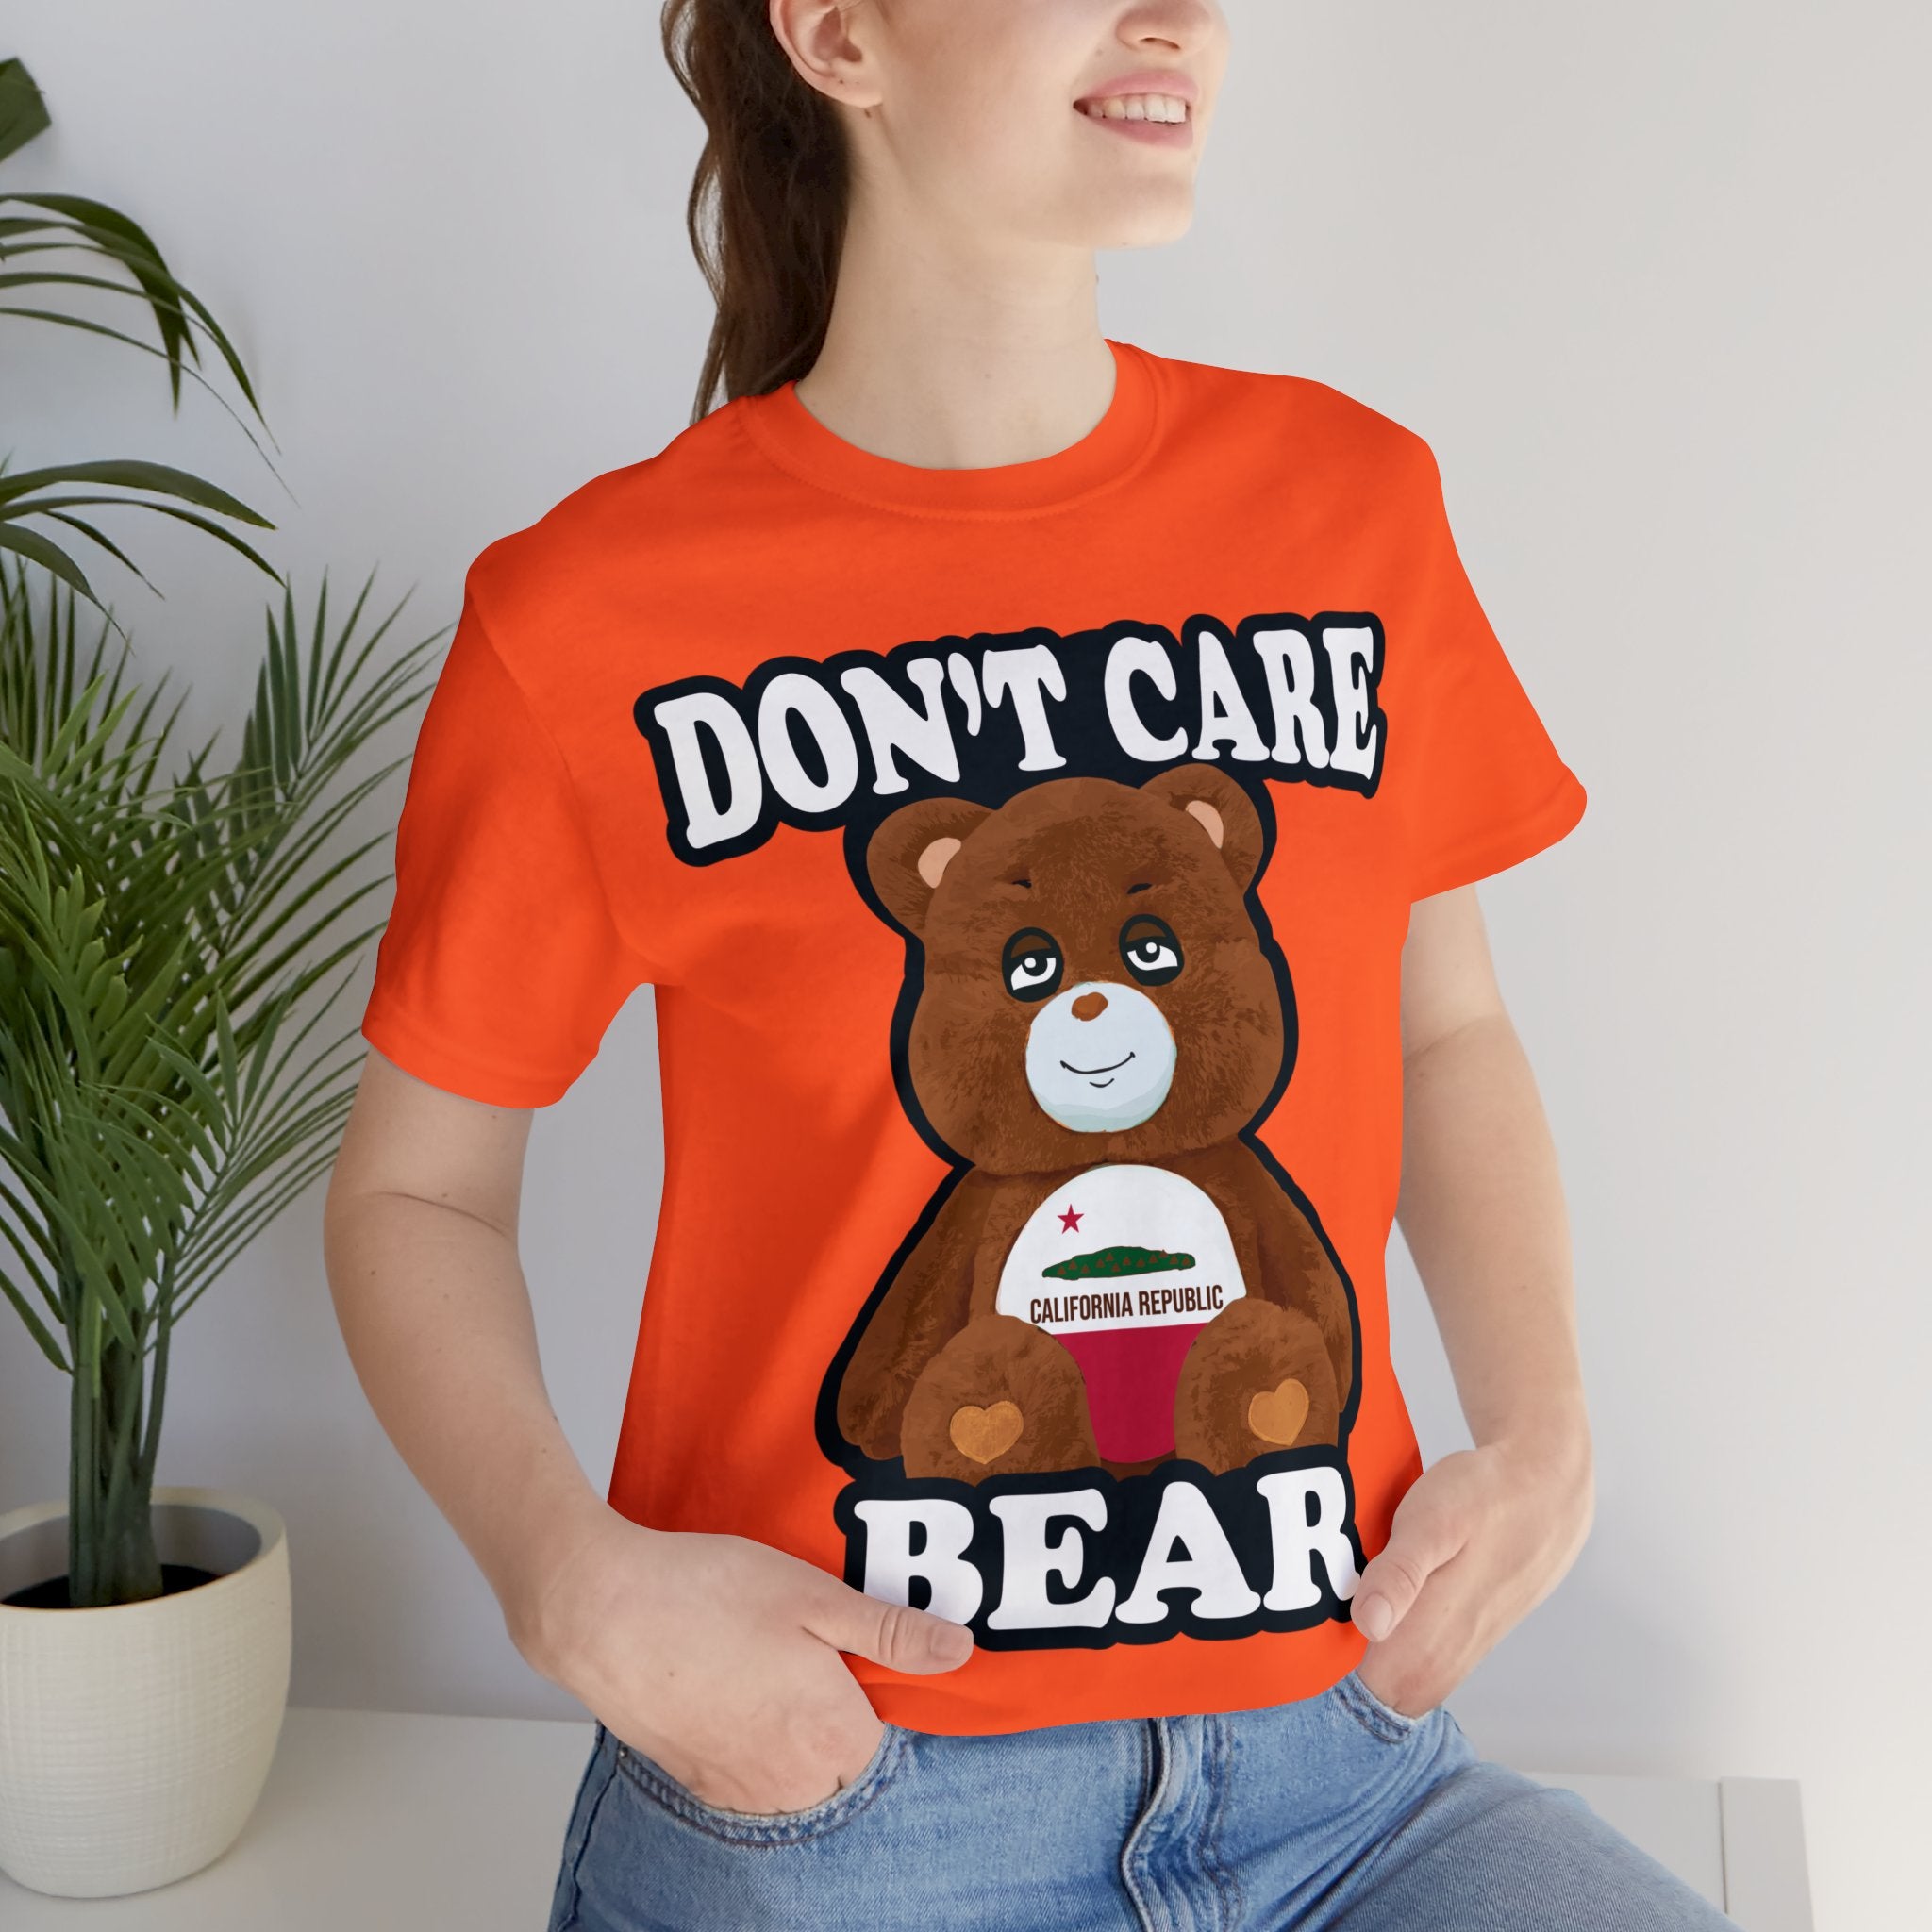 Don't Care Bear (CA) - Black Outline